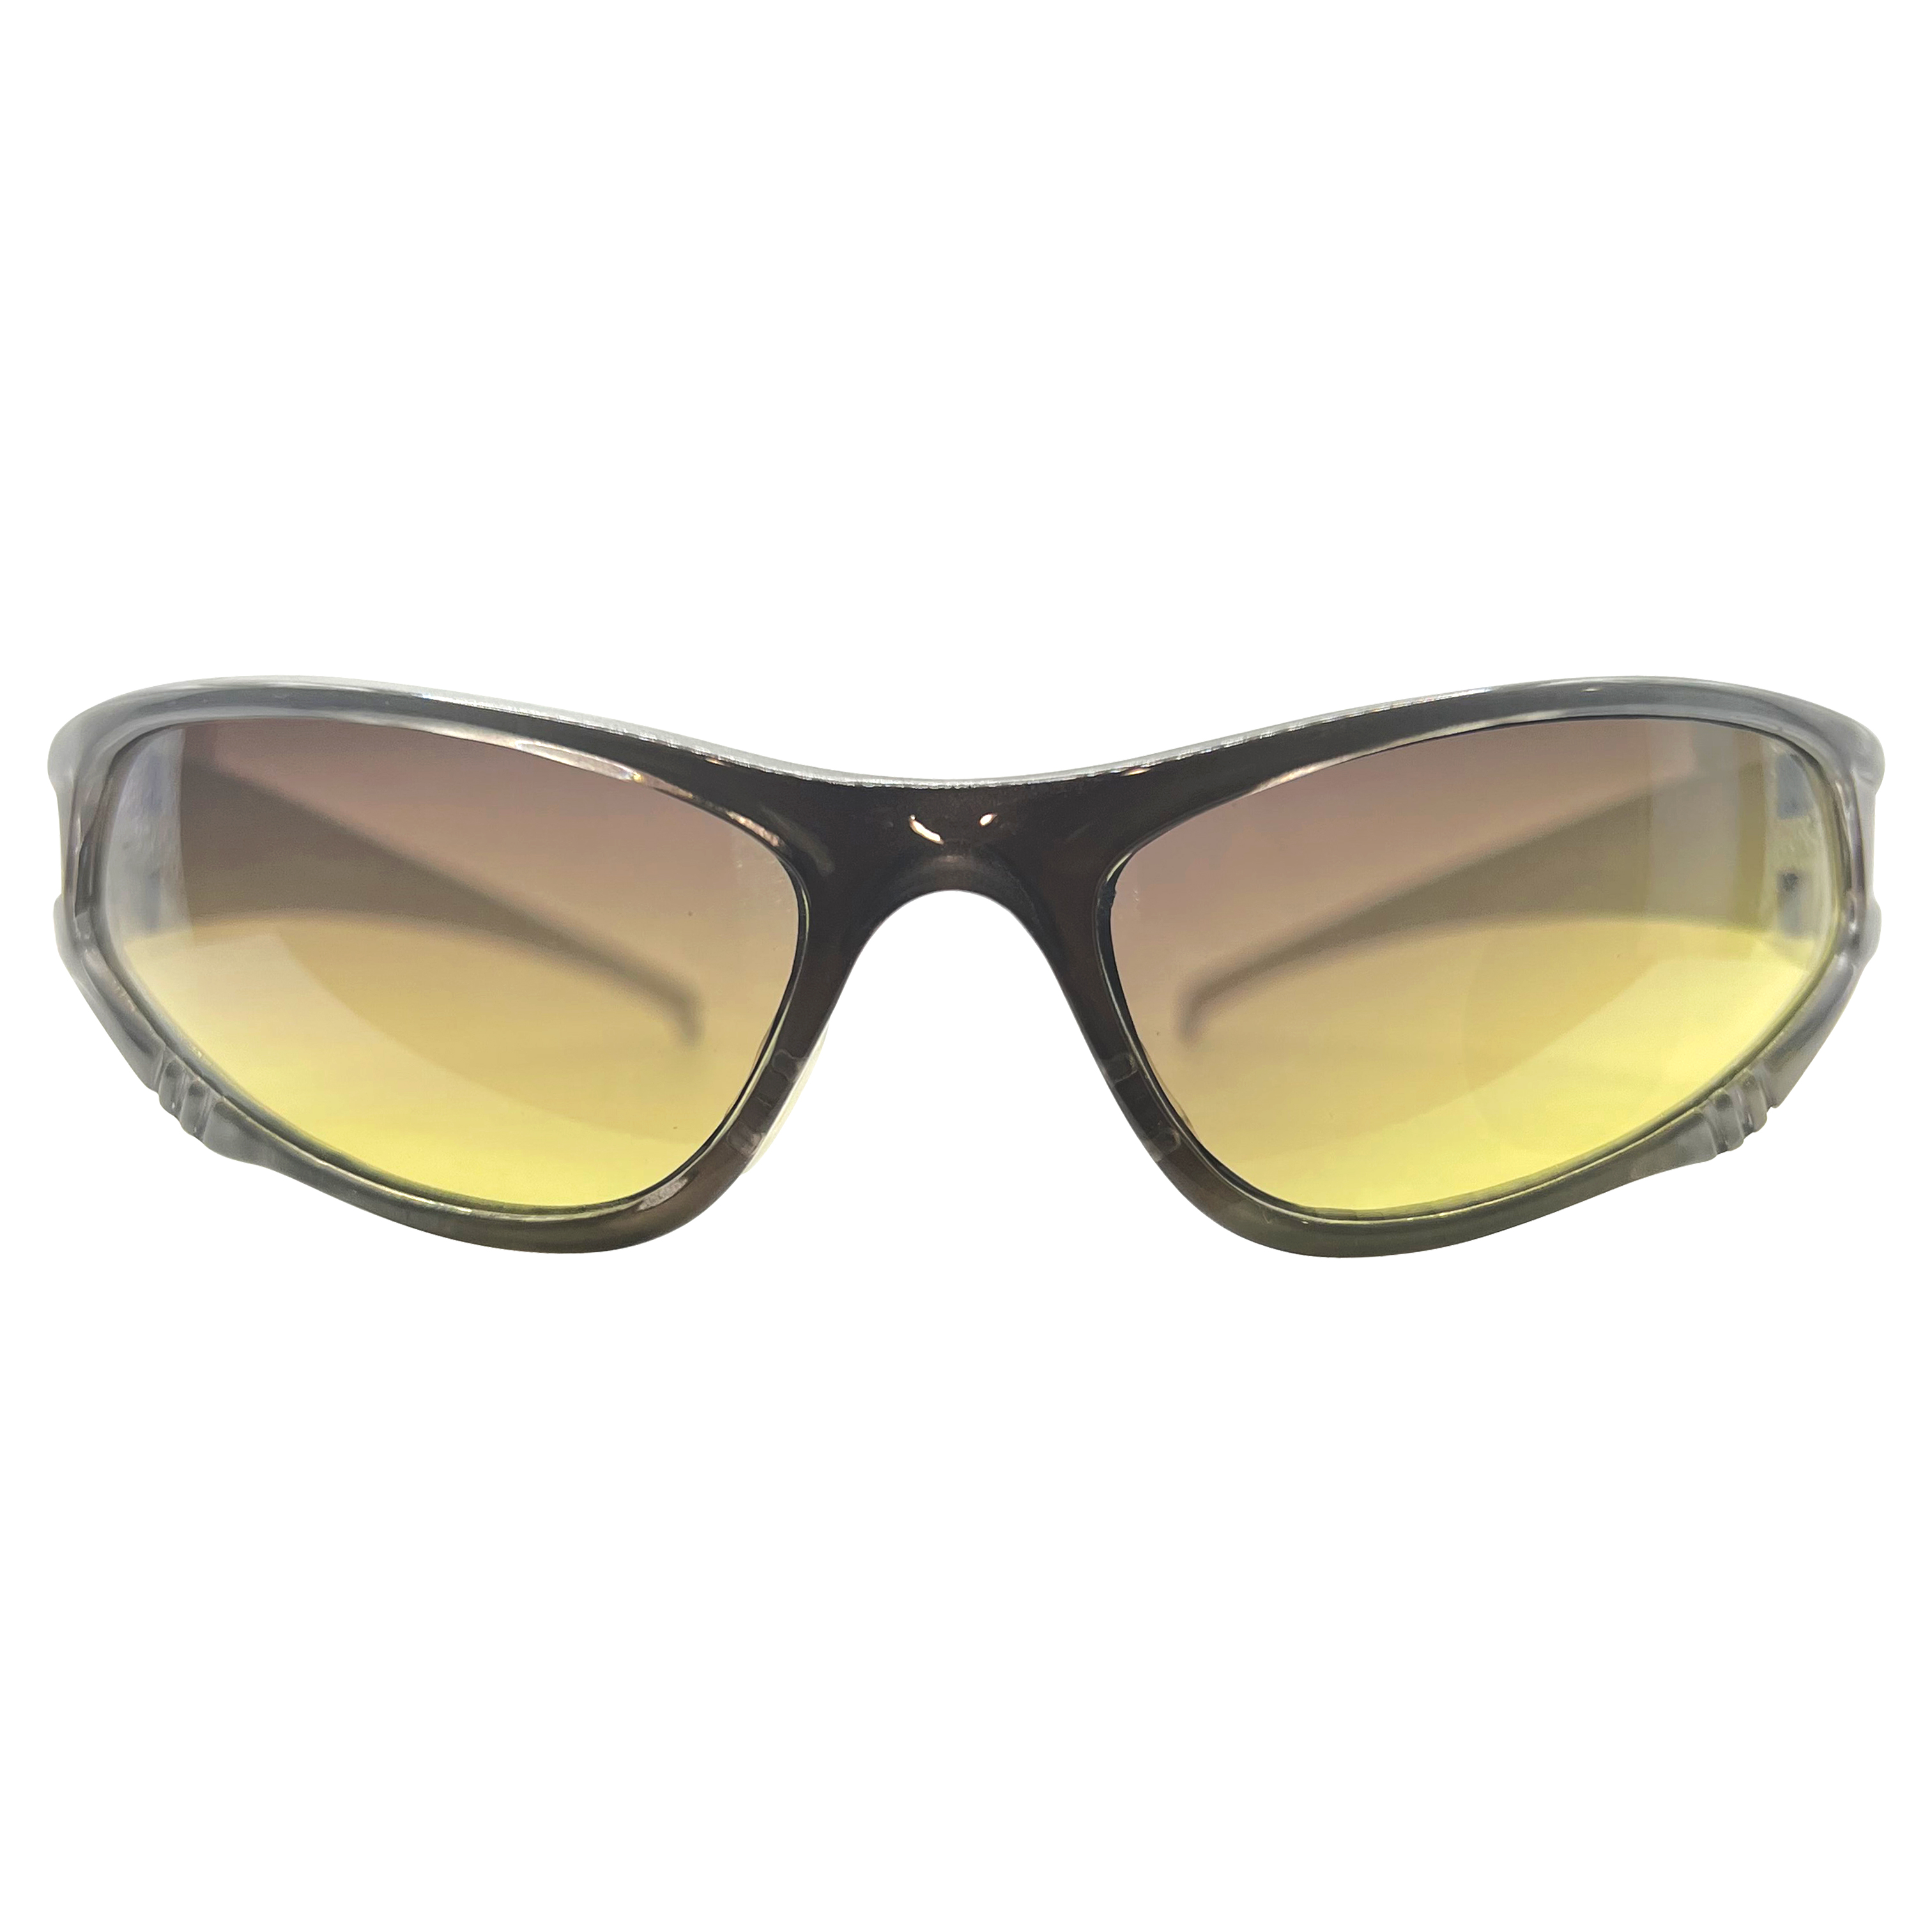 TWERK Amber/Silver Copper Fashion Sports Sunglasses